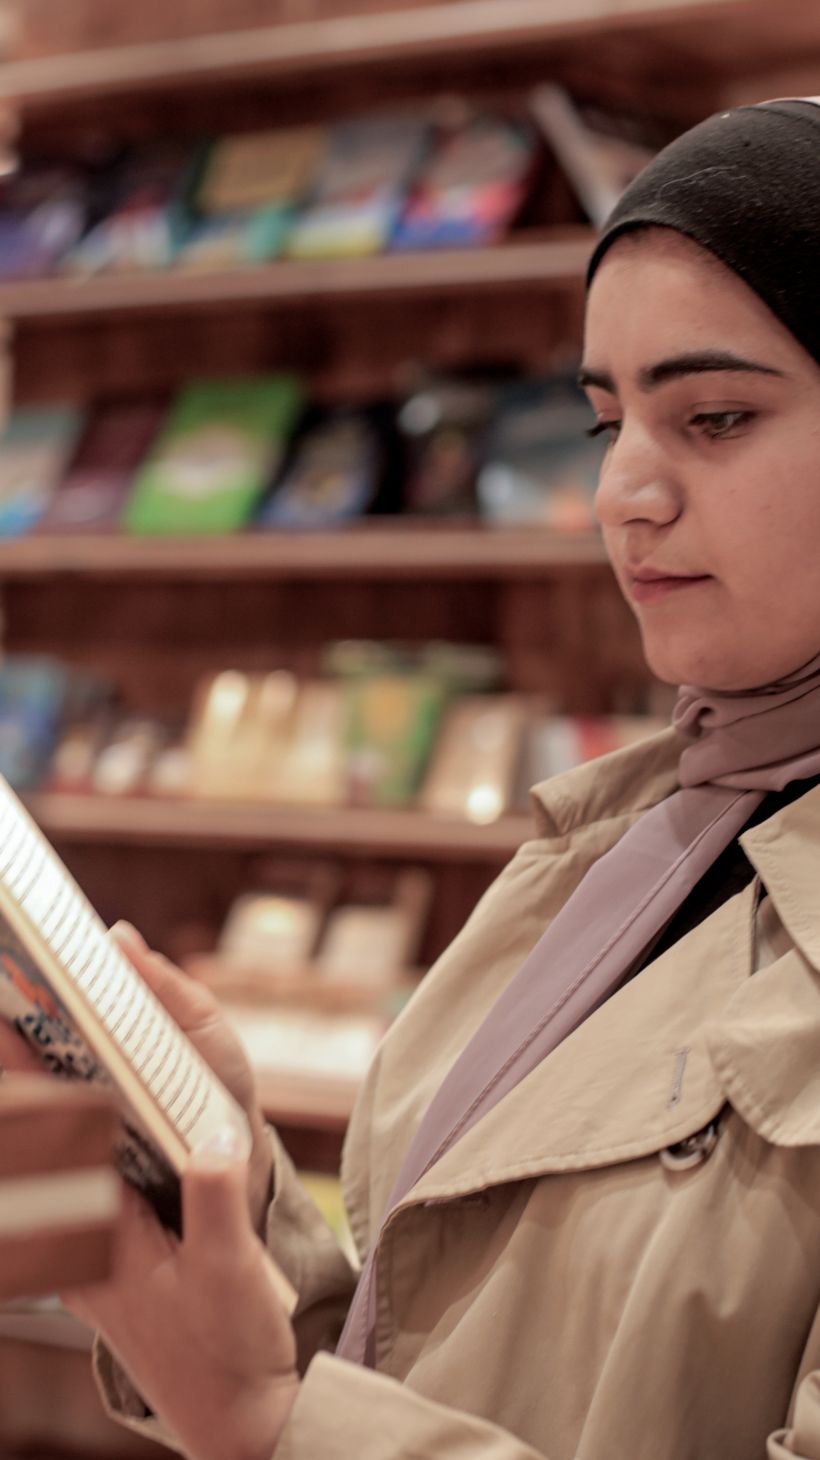 A young woman reads through a book